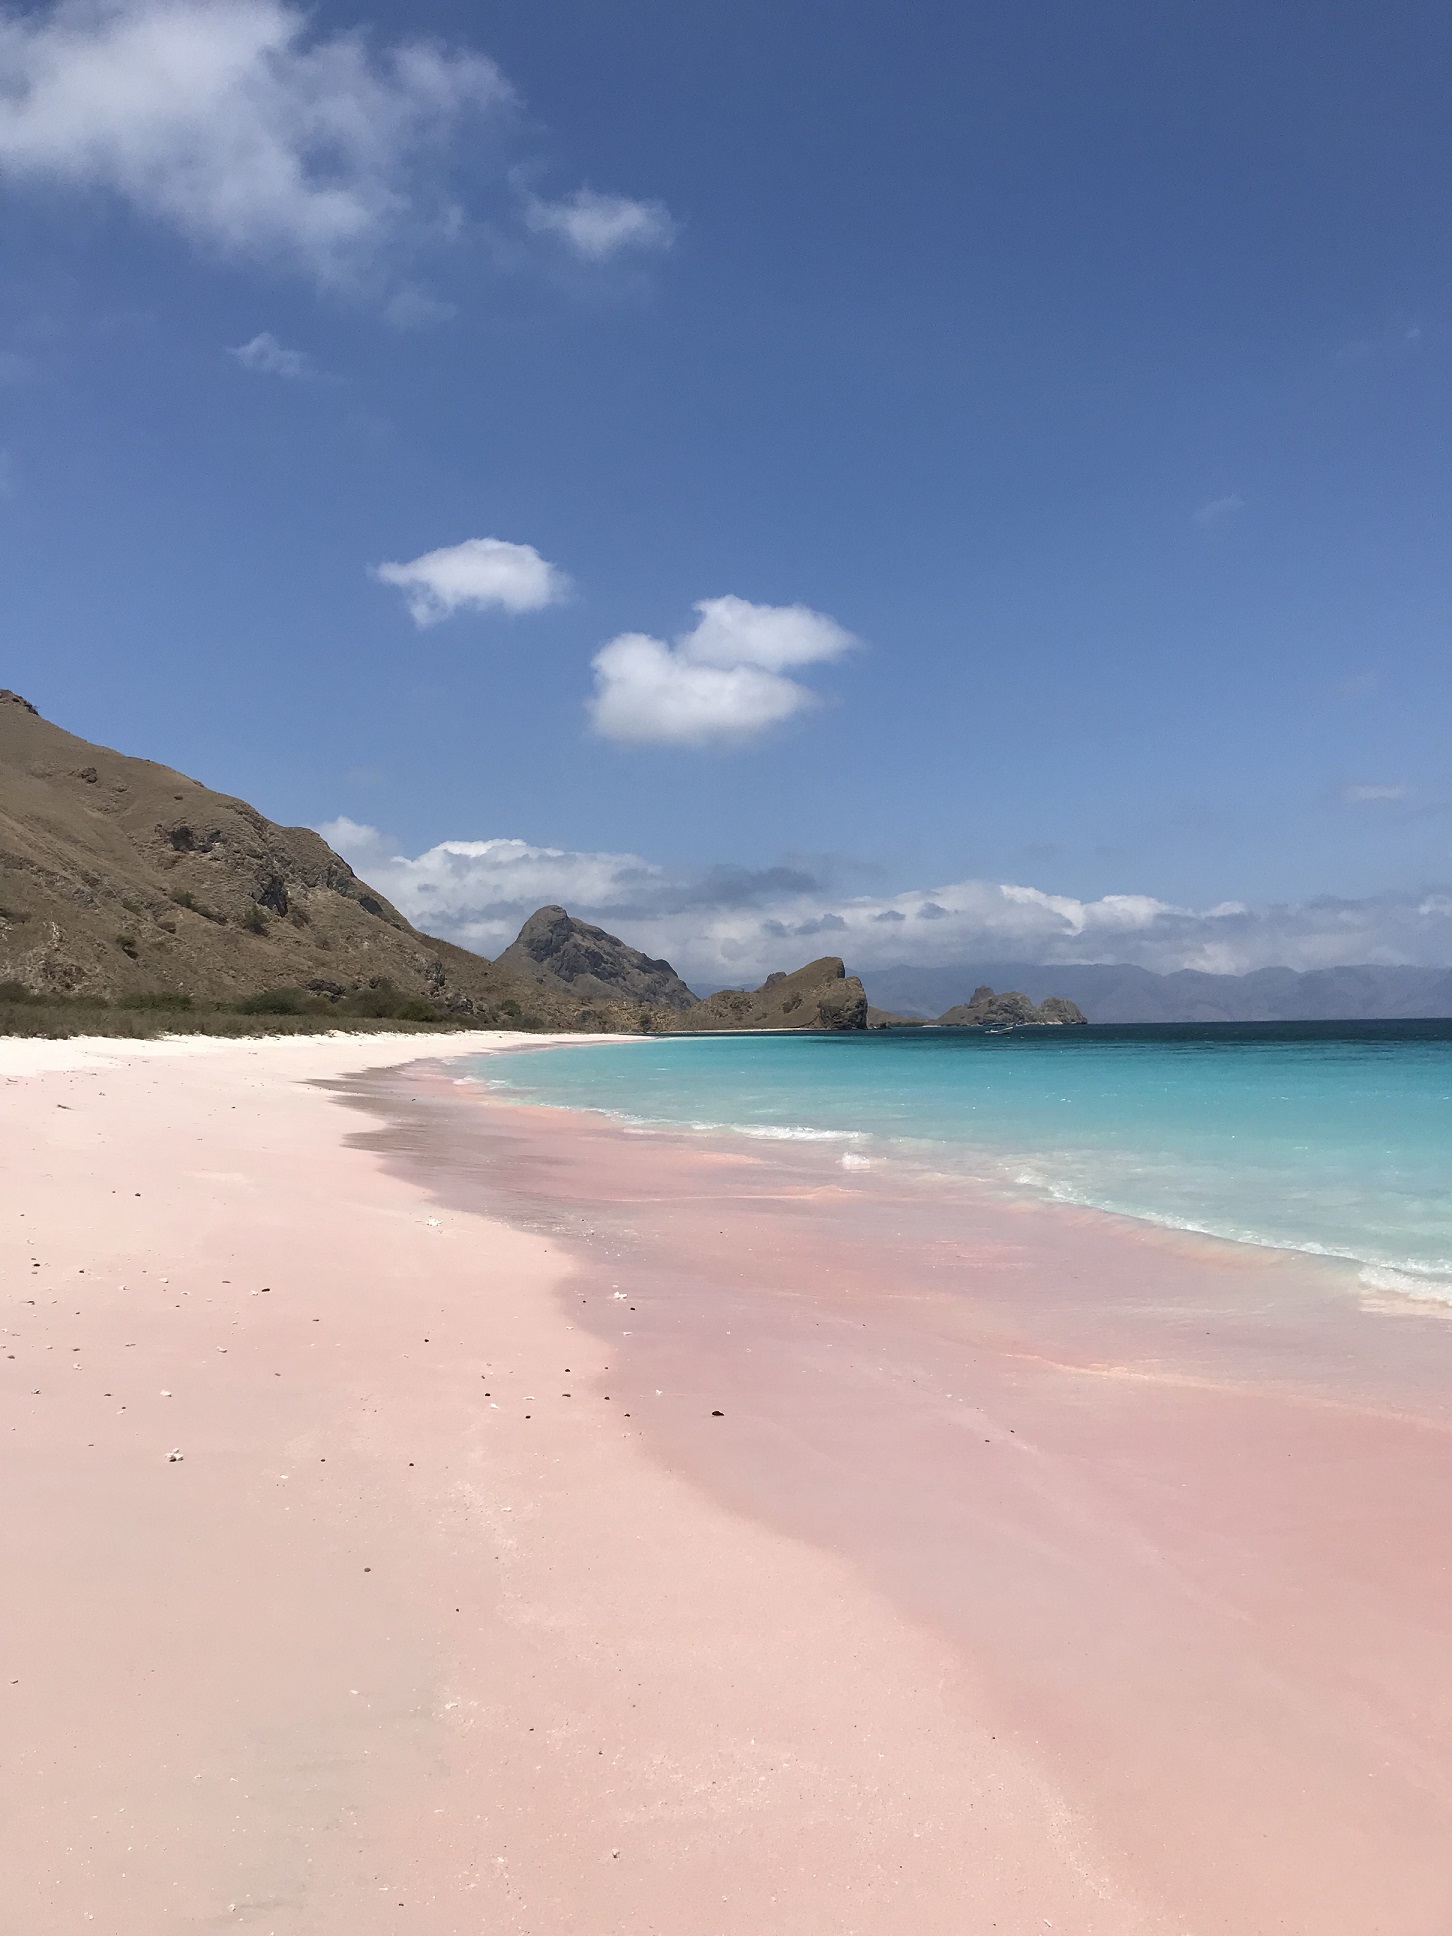 Warna Ombre Pink Biru Pantai Merah Muda Yang Manjakan Mata